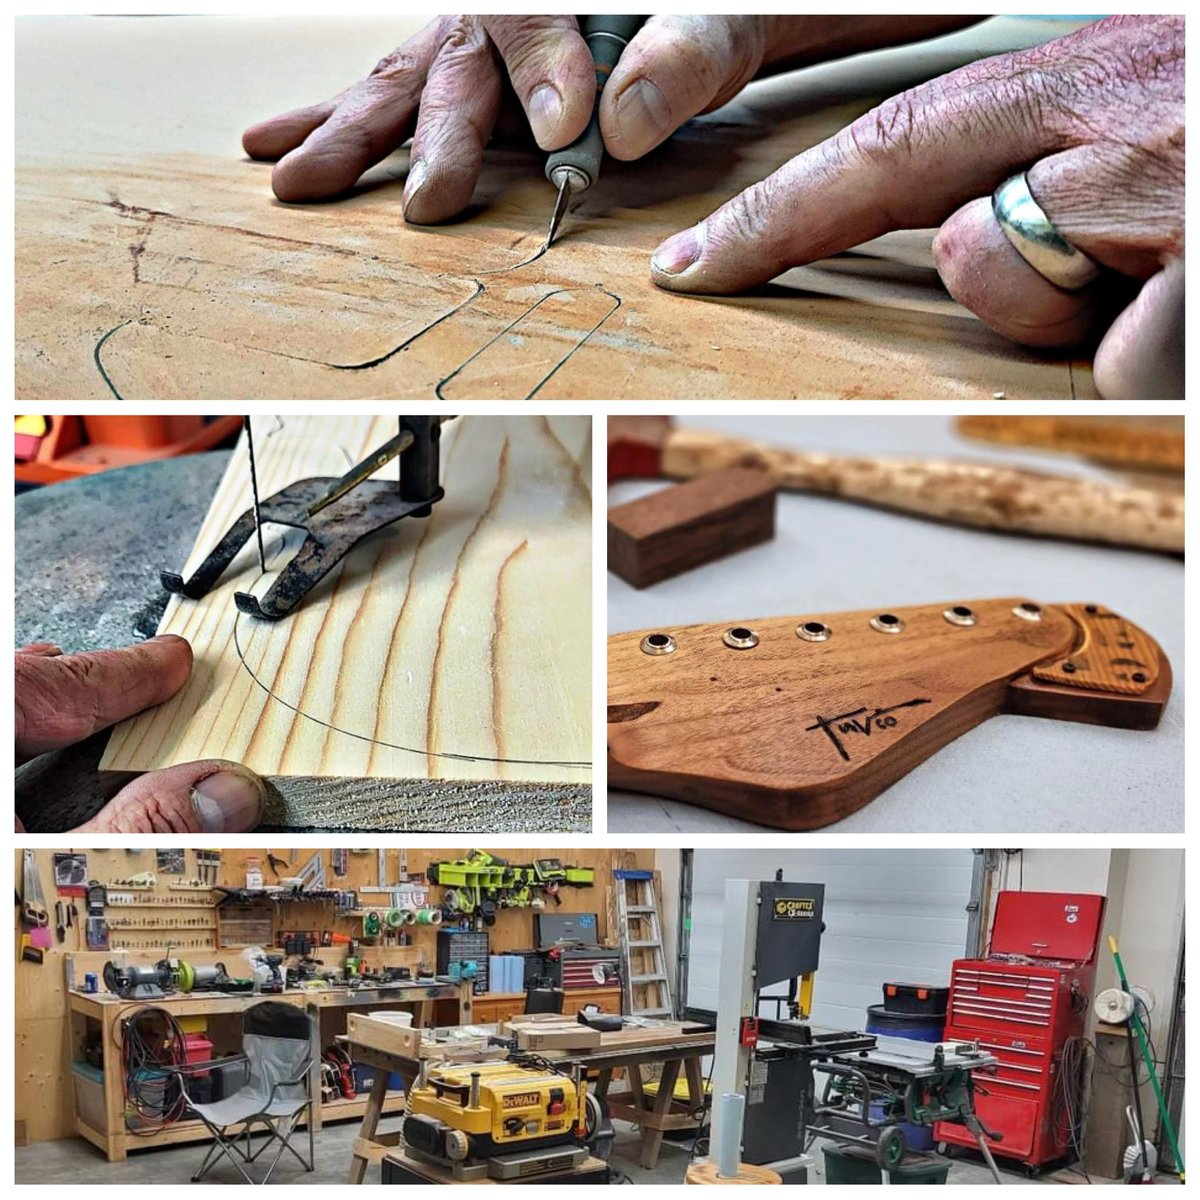 At TNV when we say handcrafted we mean #handcrafted Visit us at tnvguitars.com 😎 #guitars #guitar #handmade #woodworking #reclaimed #wood #barncaster #yyc #calgary #okotoks #madeincanada 🇨🇦#TNVguitars